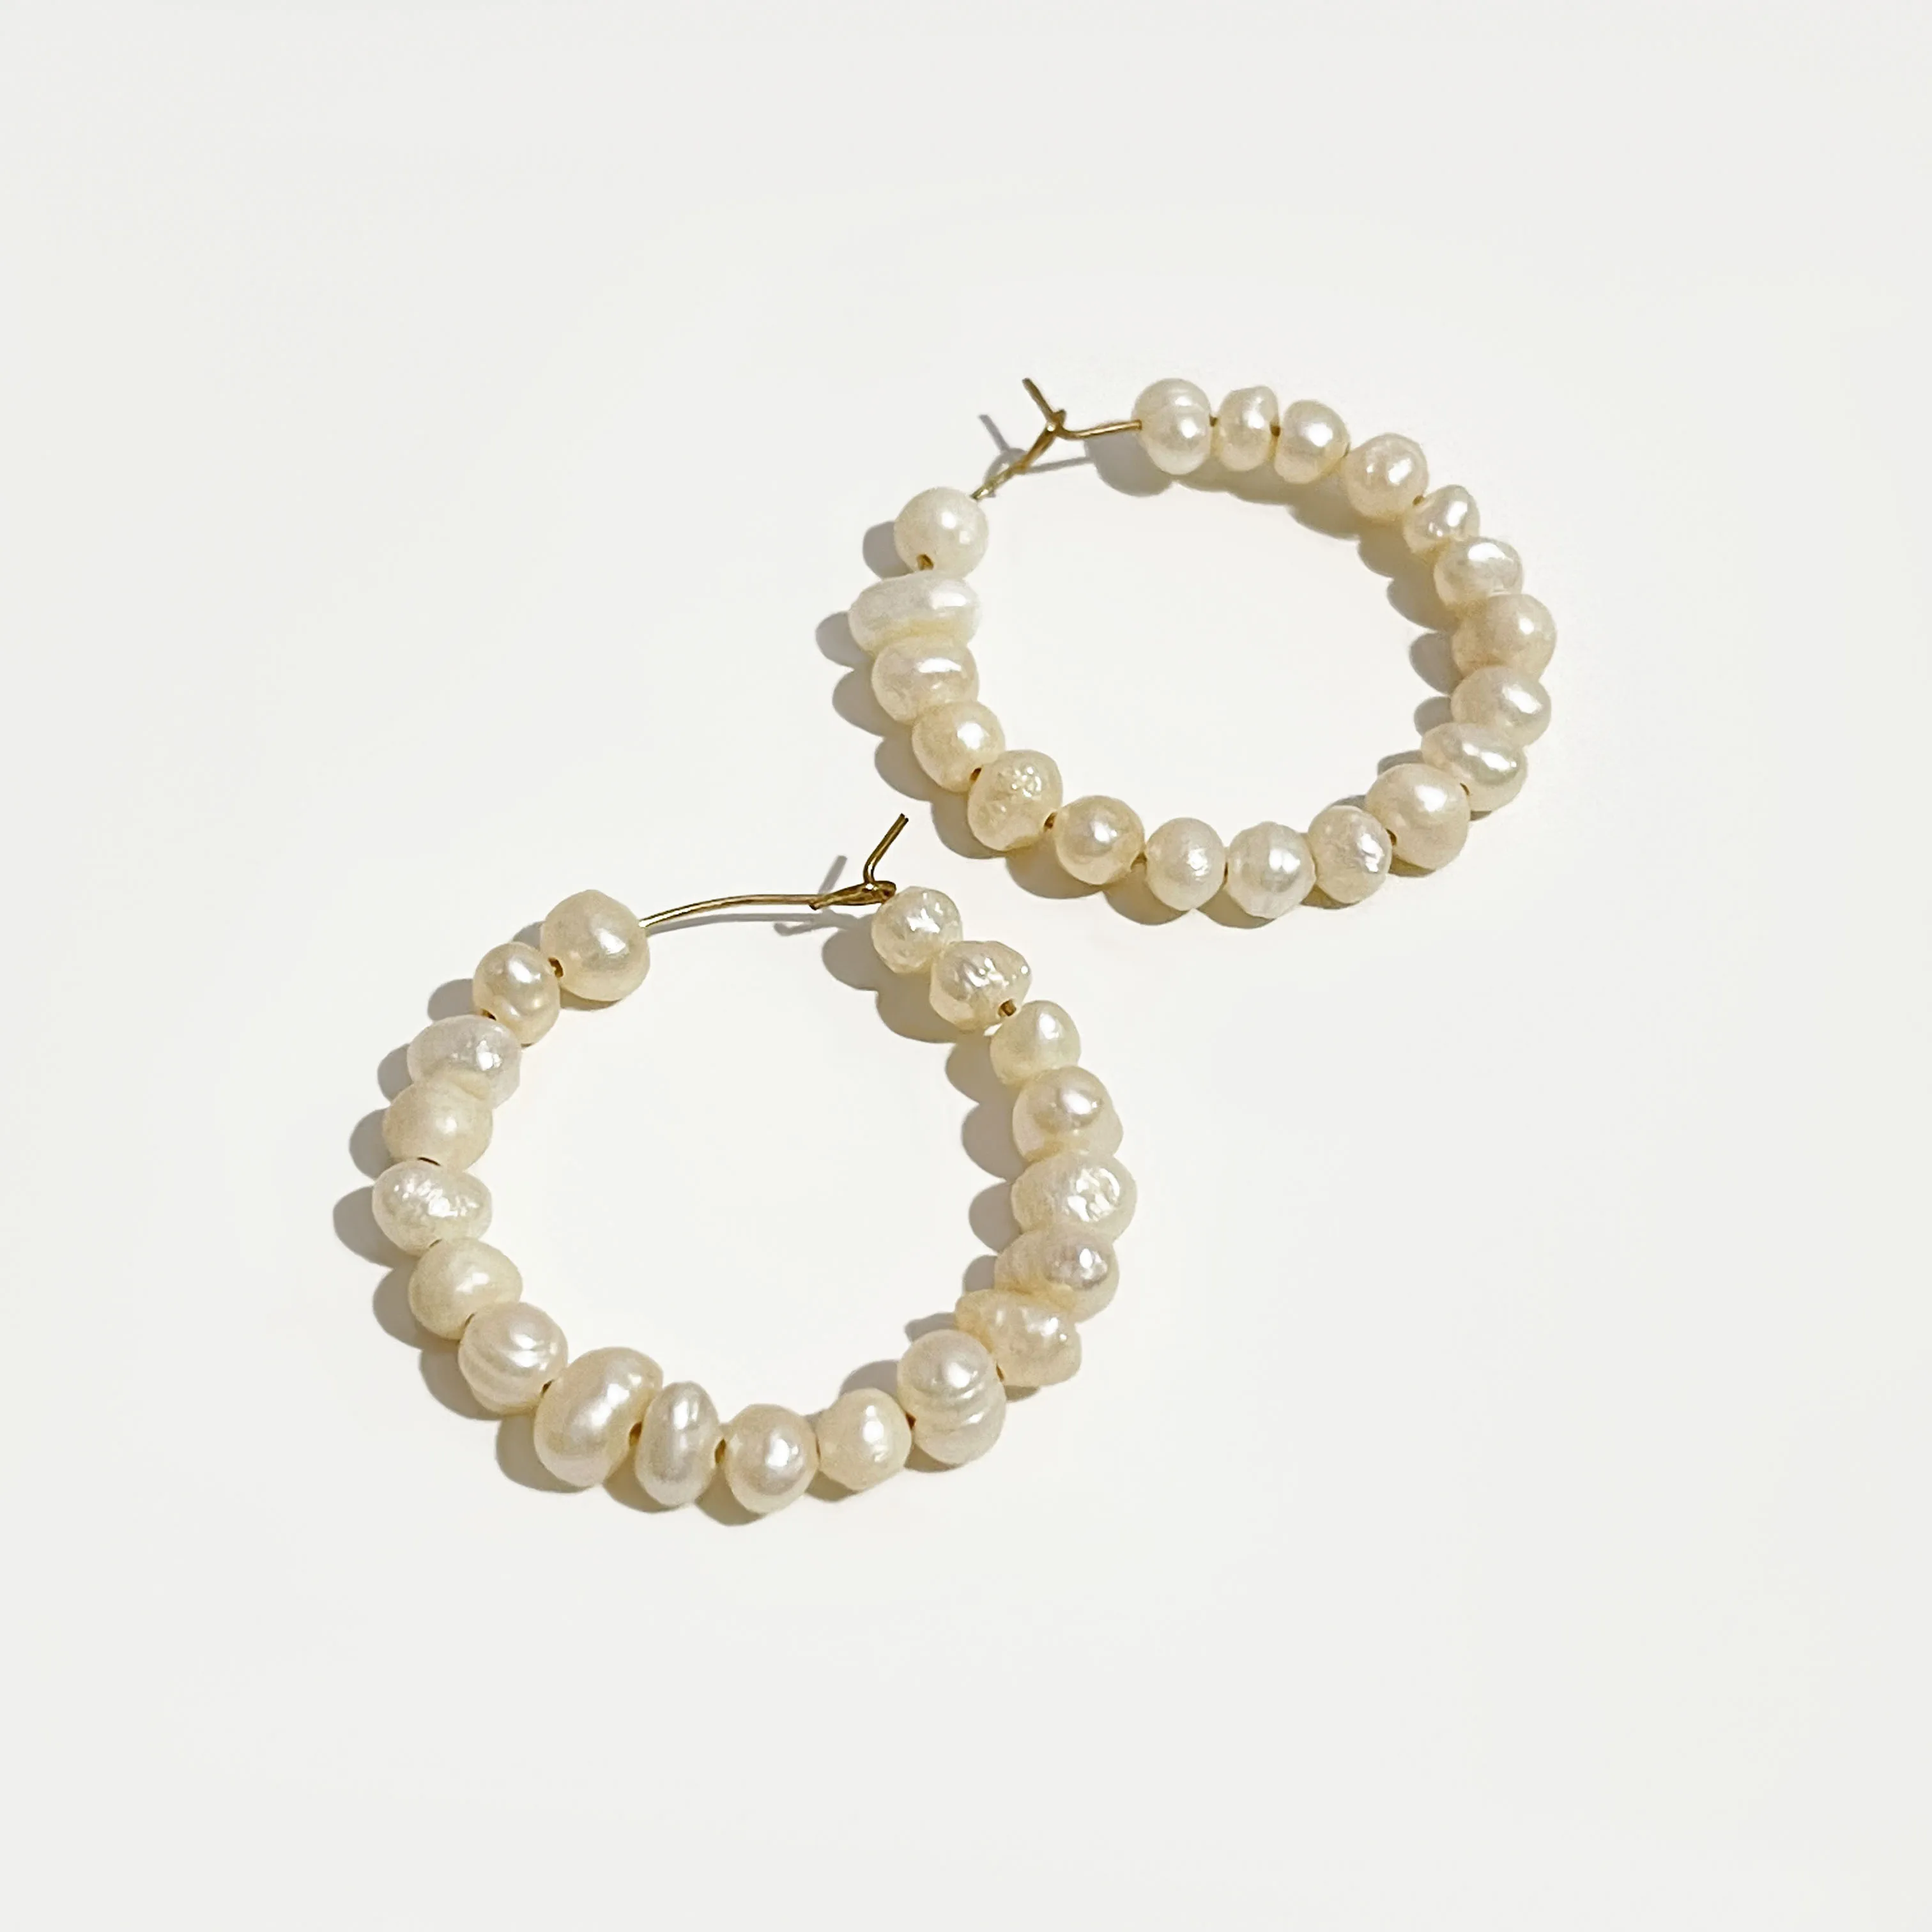 

Peri'sBox Handmade Geometric Beaded Pearl Hoop Earrings for Women Unique Natural Freshwater Pearl Earrings Hoops Boho Jewelry